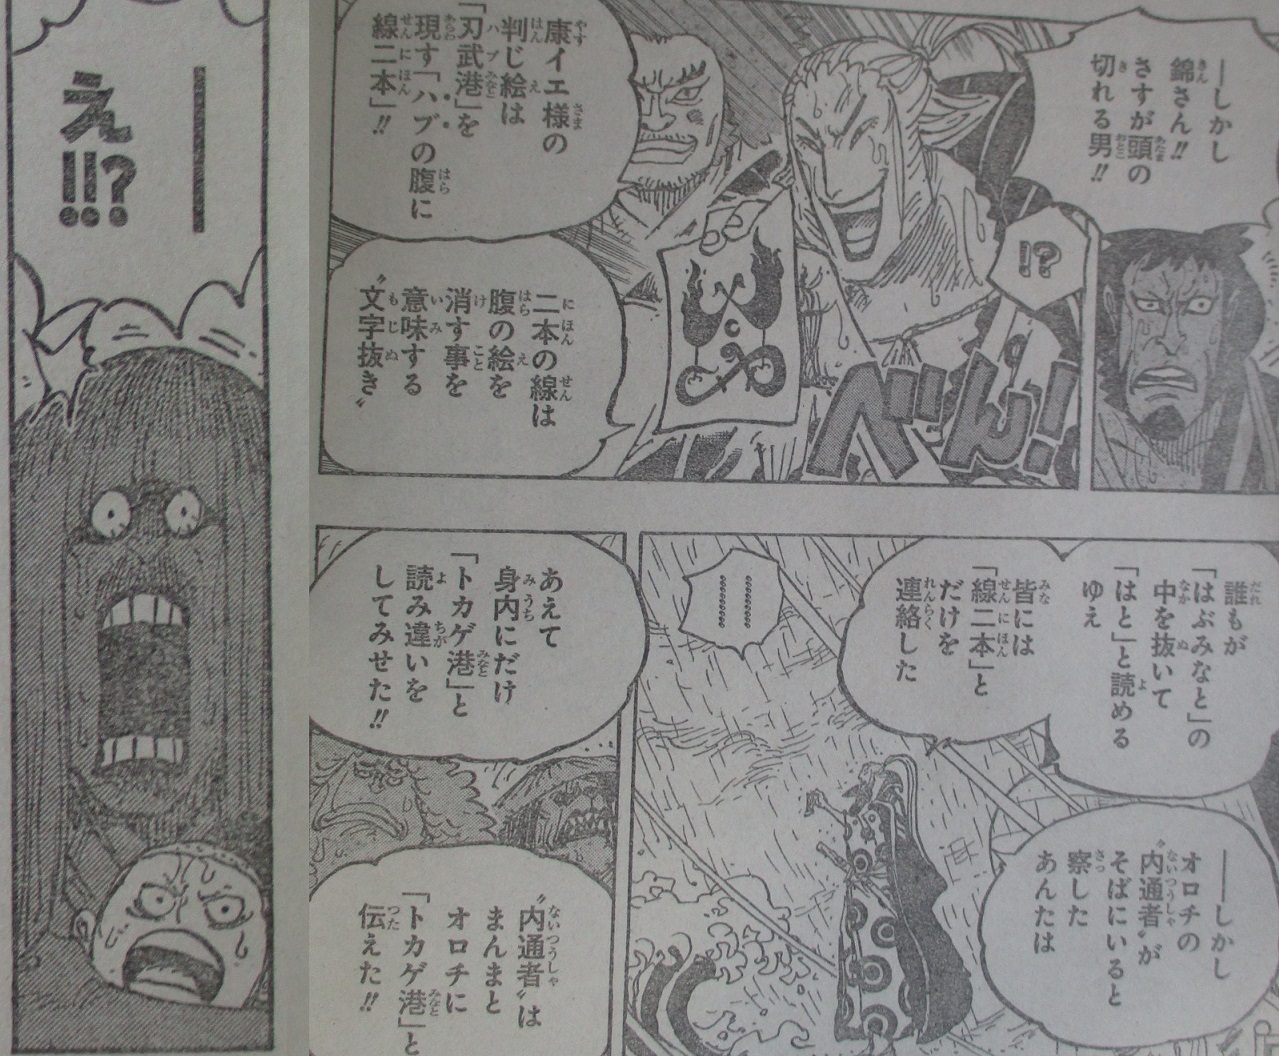 Spoiler One Piece Chapter 975 Spoiler Summaries And Images Page 2 Worstgen